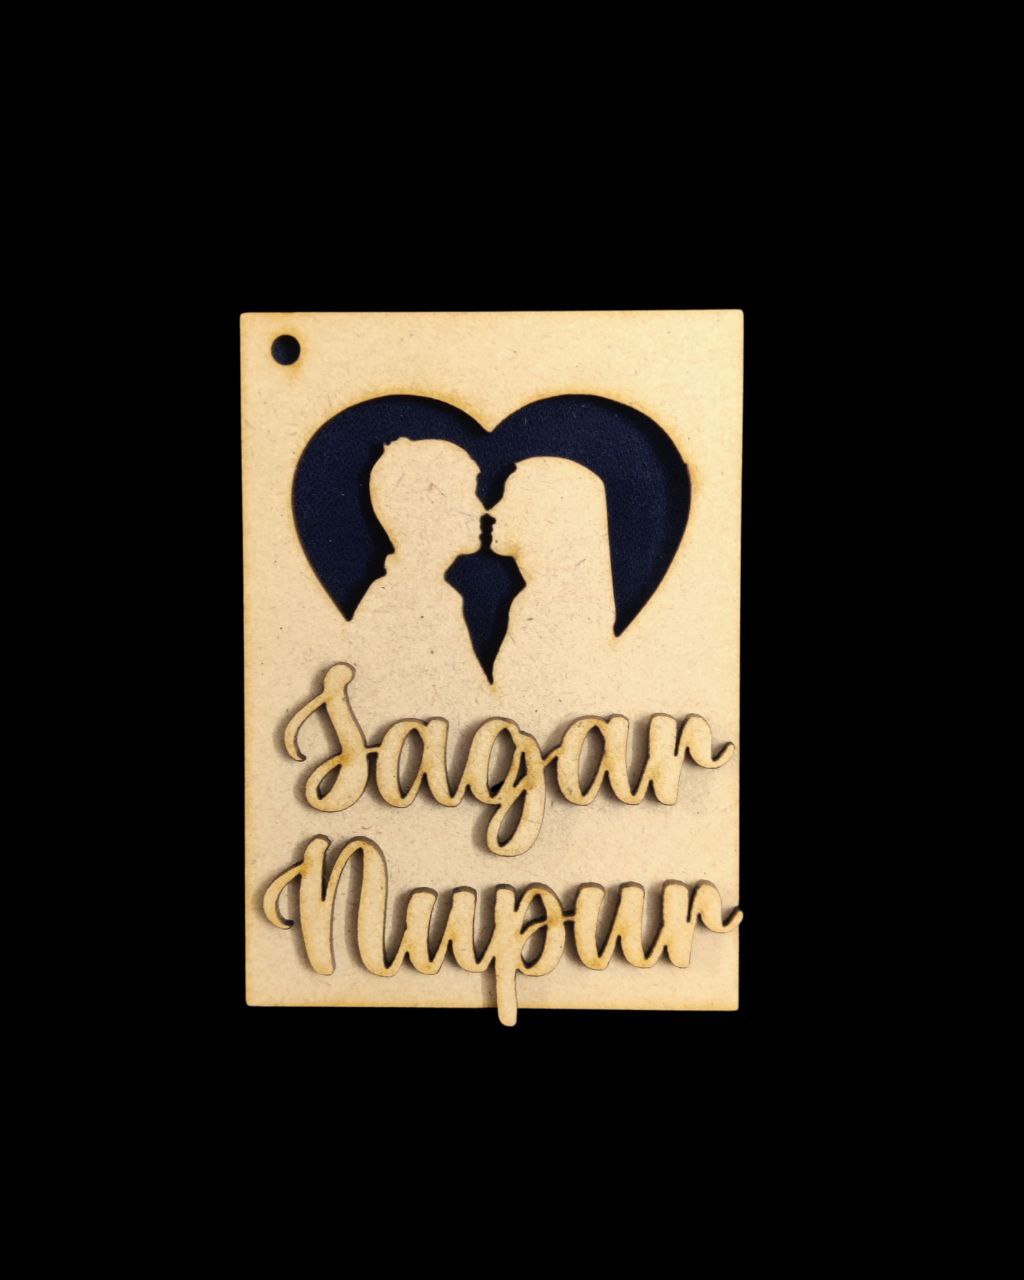 Nicknames for LegendSagar: Legend, Legend.sagar, ᴸᴱᴳᴱᴺᴰSAGAR, LEGENG SAGAR,  ♔〘Ł€Ꮆ€ŇĐ〙♔ sagar